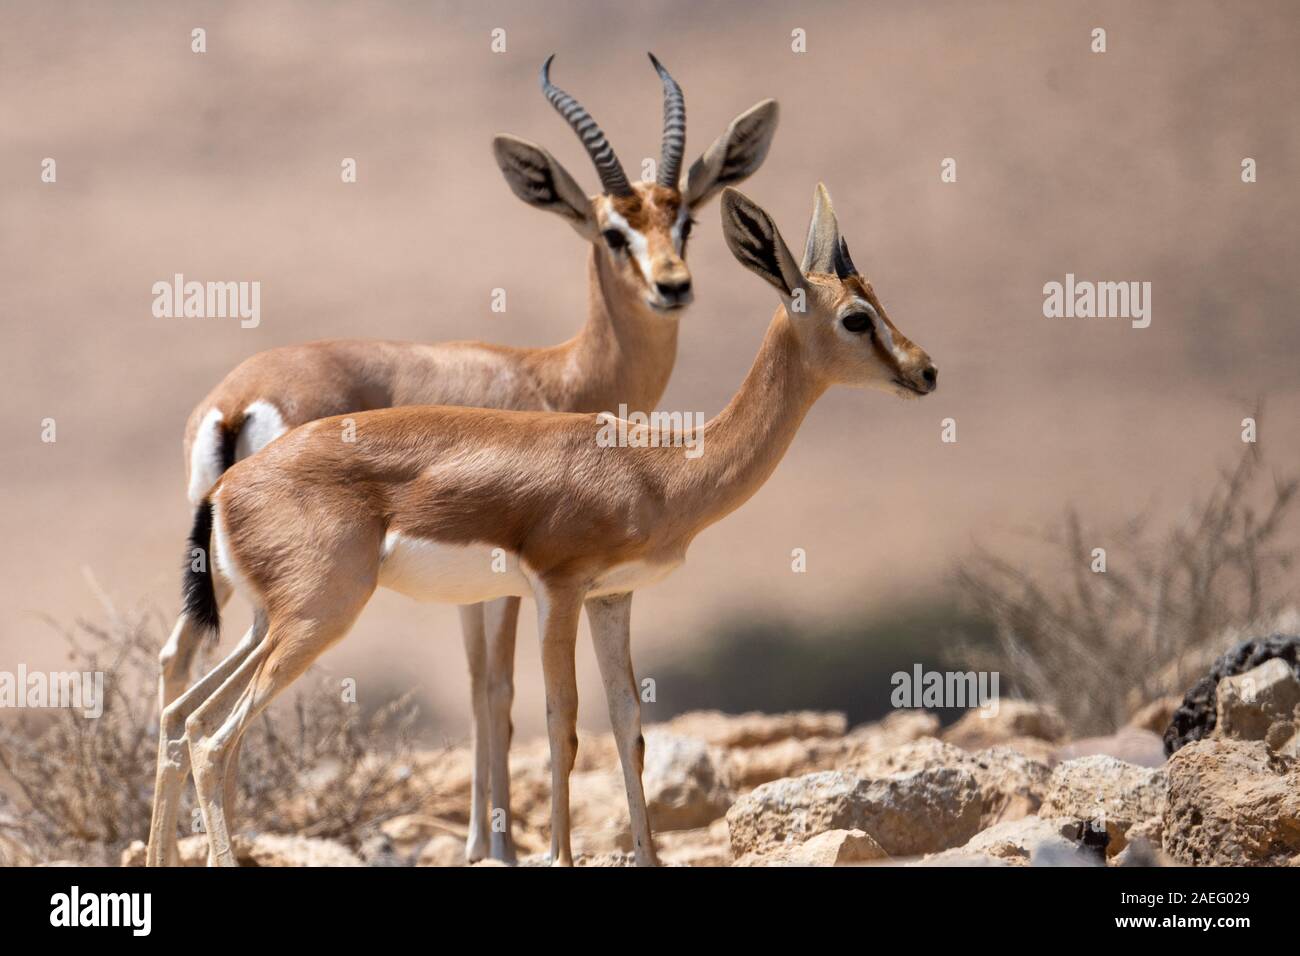 The dorcas gazelle (Gazella dorcas), also known as the ariel gazelle, is a small and common gazelle. The dorcas gazelle stands about 55–65 cm at the s Stock Photo